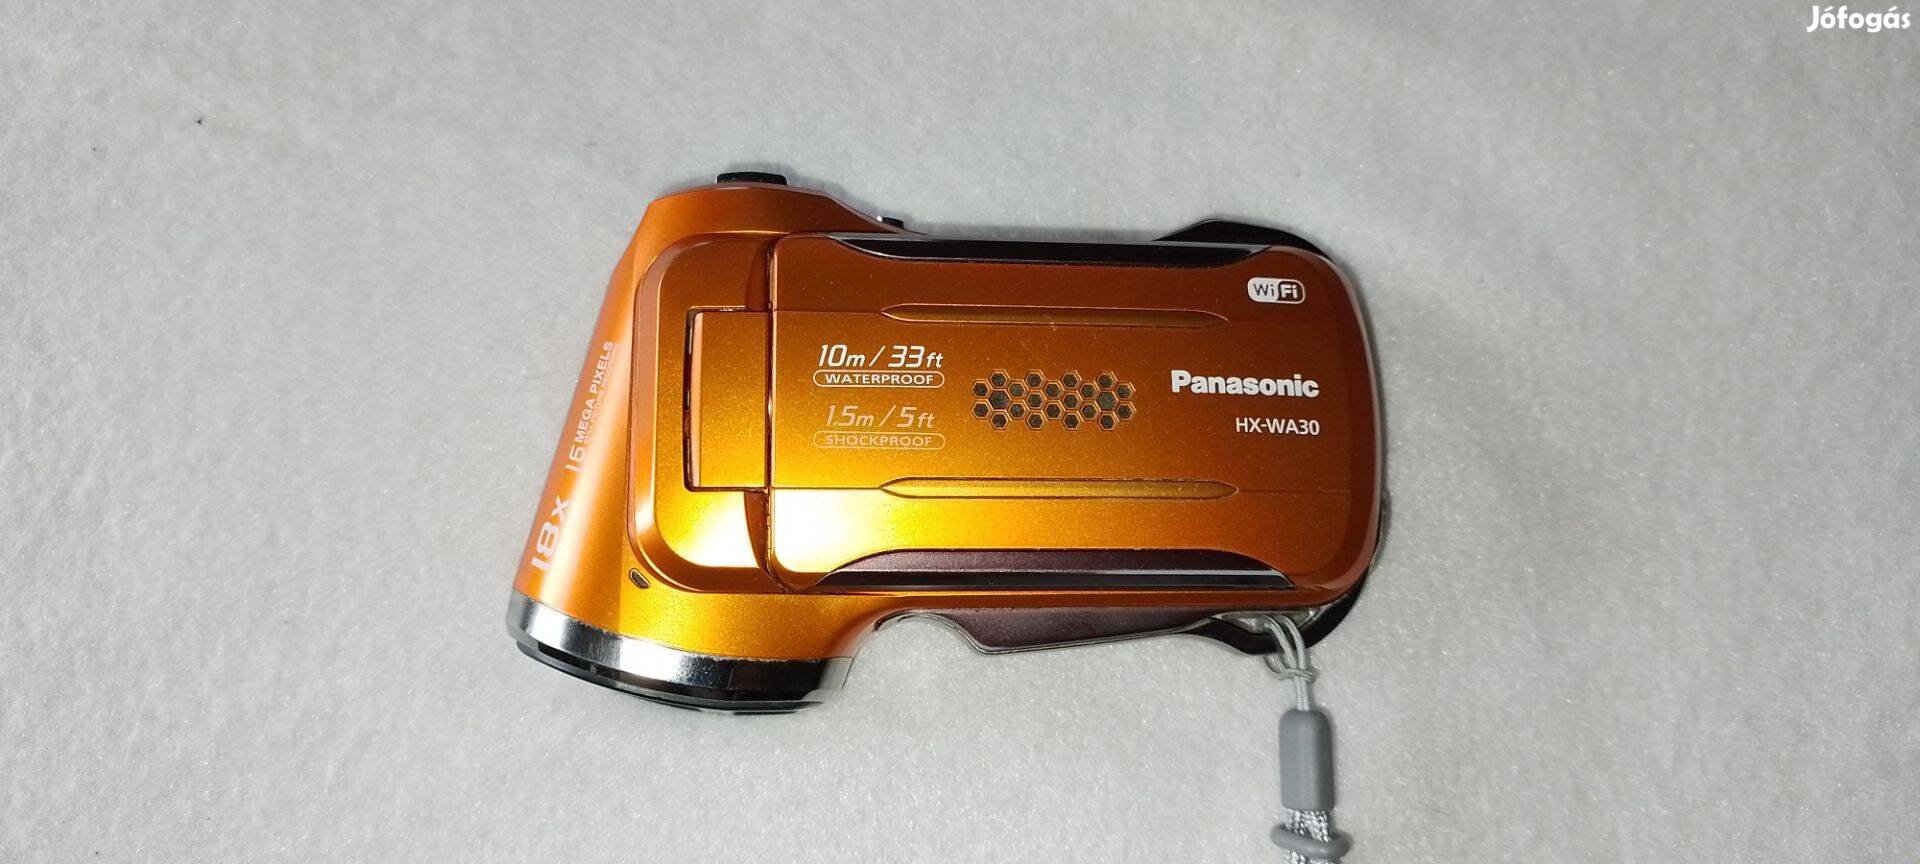 Panasonic HX-WA30 FHD videókamera-vízálló,wifis, 18x zoom,16 megapixel